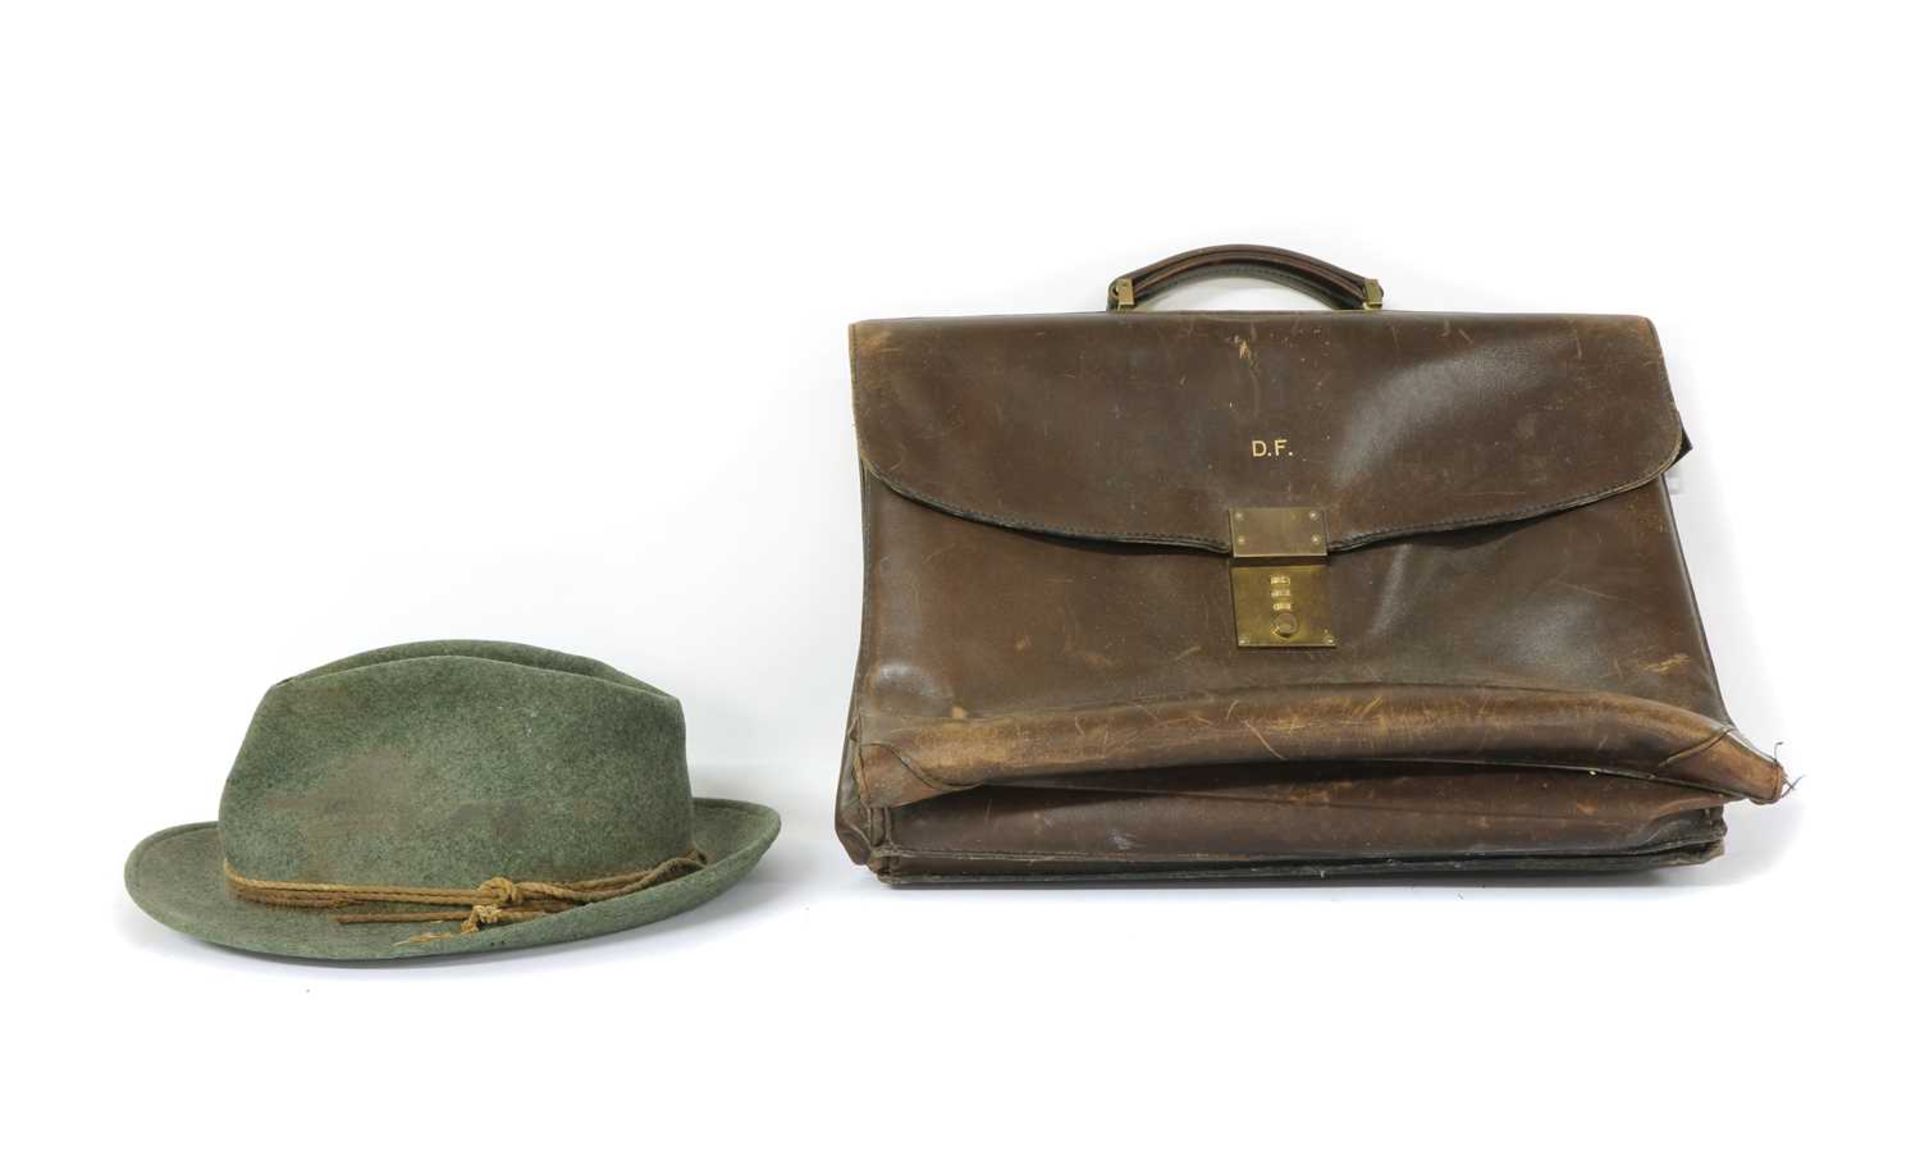 Douglas Fairbanks' much-loved green felt trilby hat,